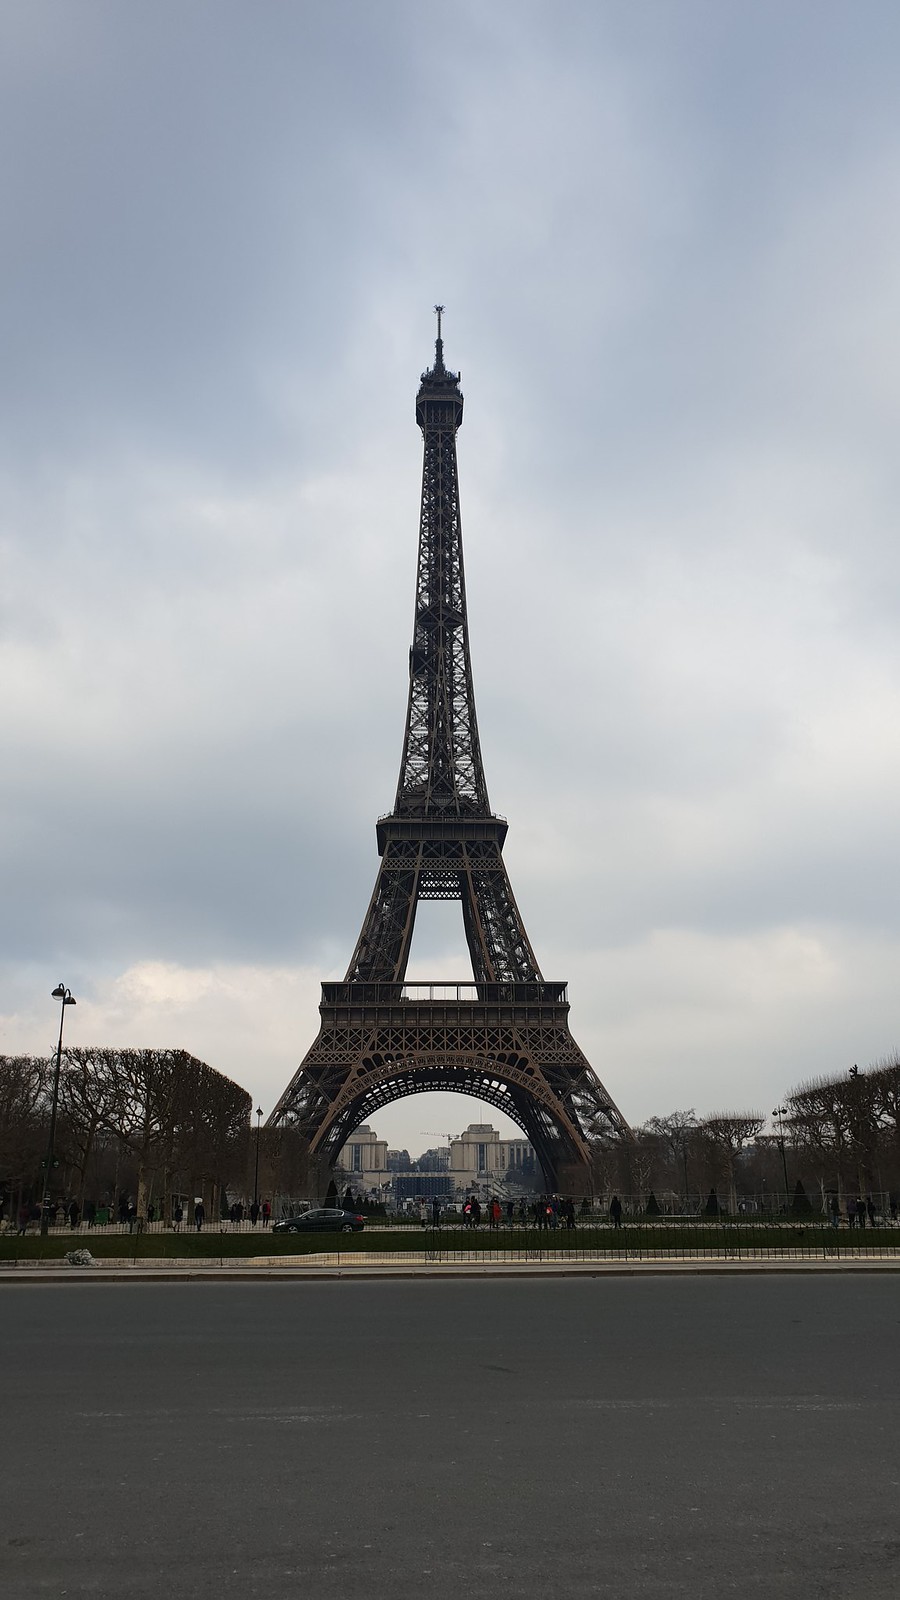 Menara Eiffel yang dijepret dengan kamera Galaxy S9 Plus. Foto ini diambil dalam kondisi membelakangi sinar matahari alias backlight, kendati begitu menara Eiffel masih kelihatan jelas. (Liputan6.com/ Agustin Setyo W)